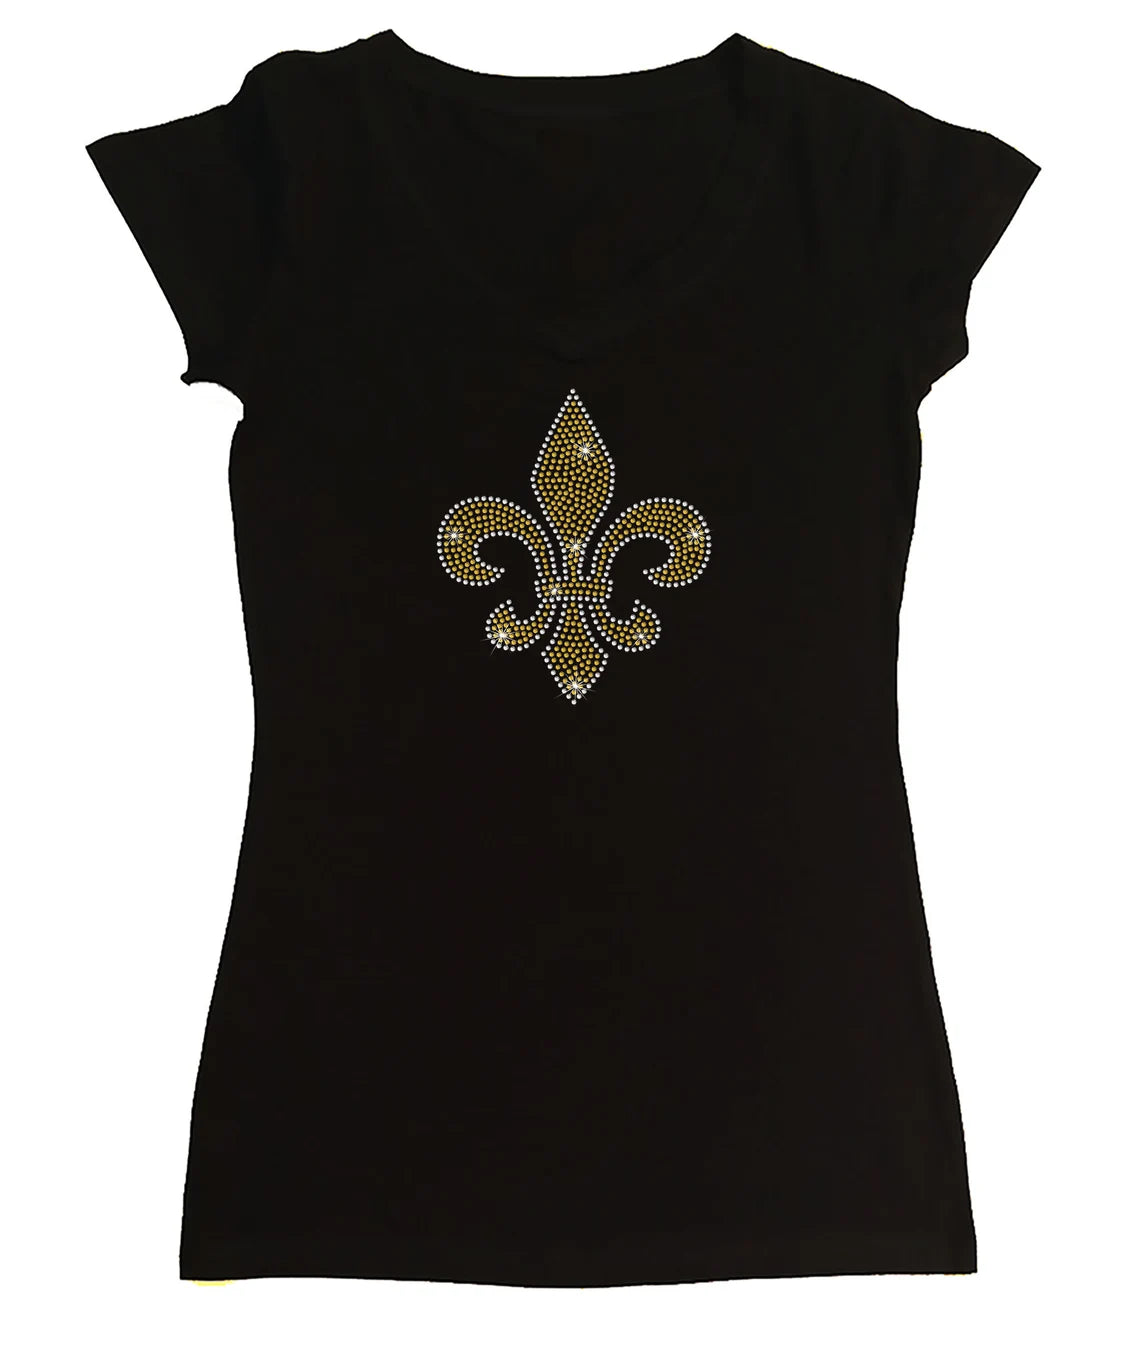 Women's Rhinestone Fitted Tight Snug Gold Fleur de Lis - Classic Design, Fleur de Lis Shirt